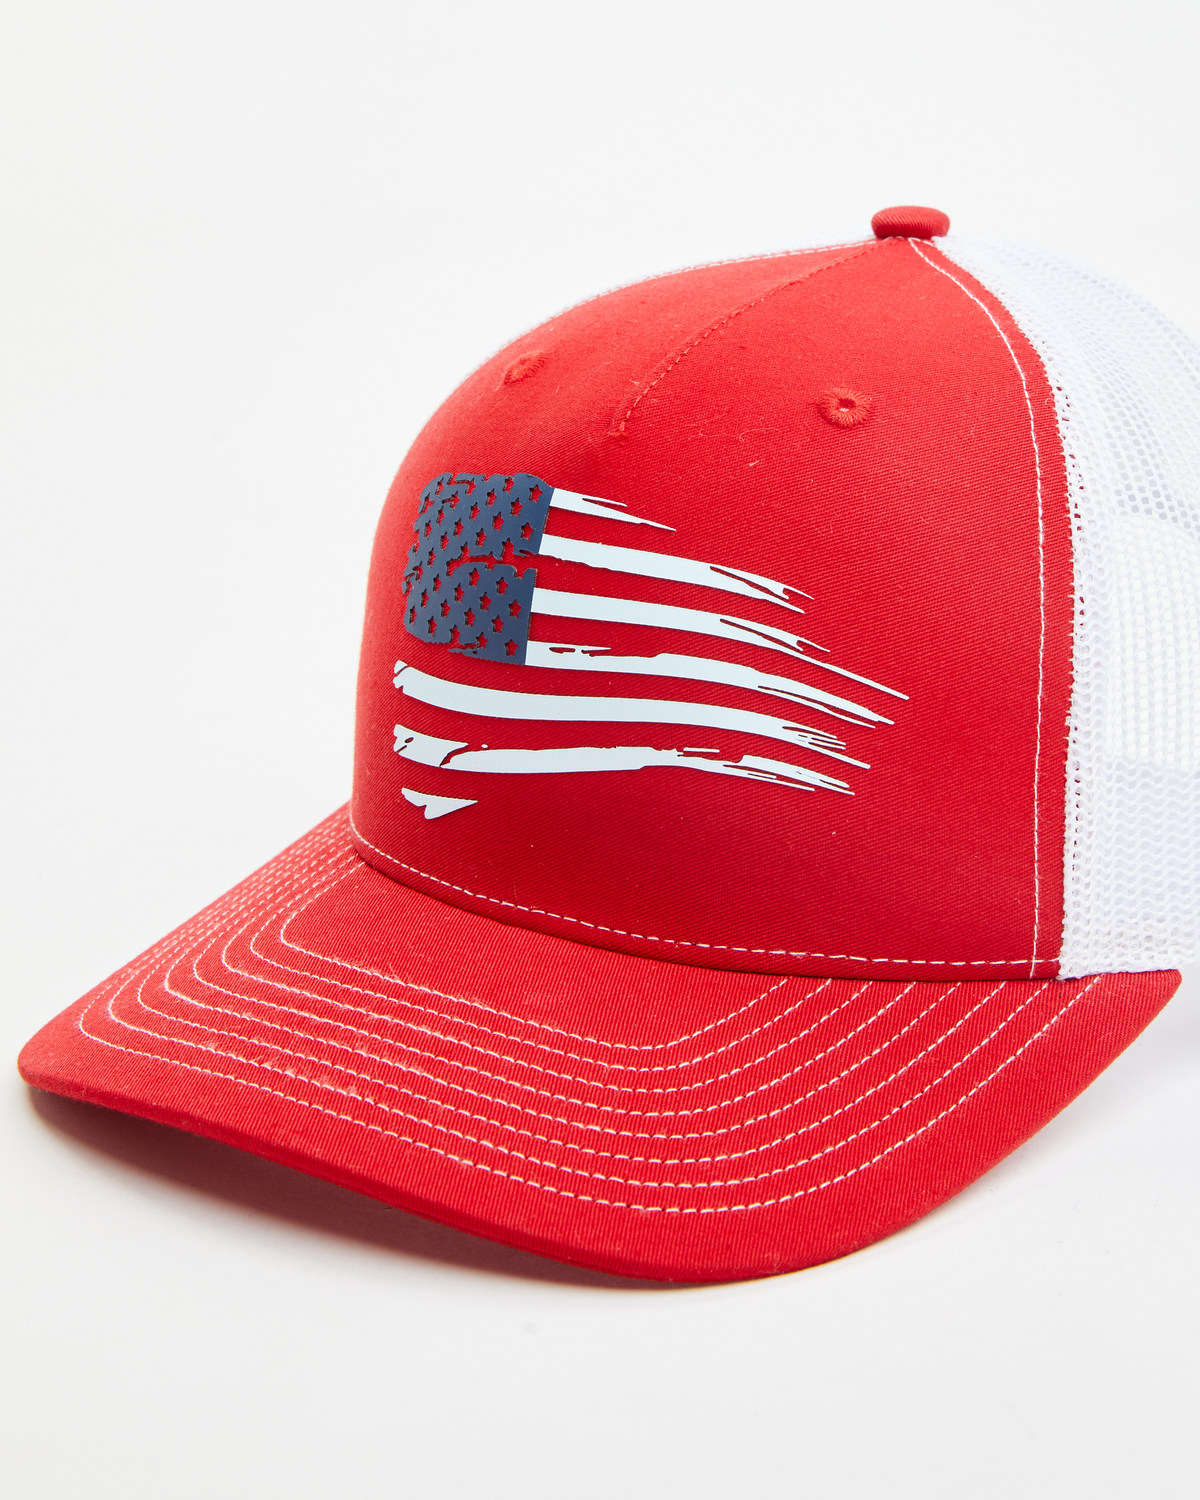 Ariat Men's Distressed USA Flag Ball Cap